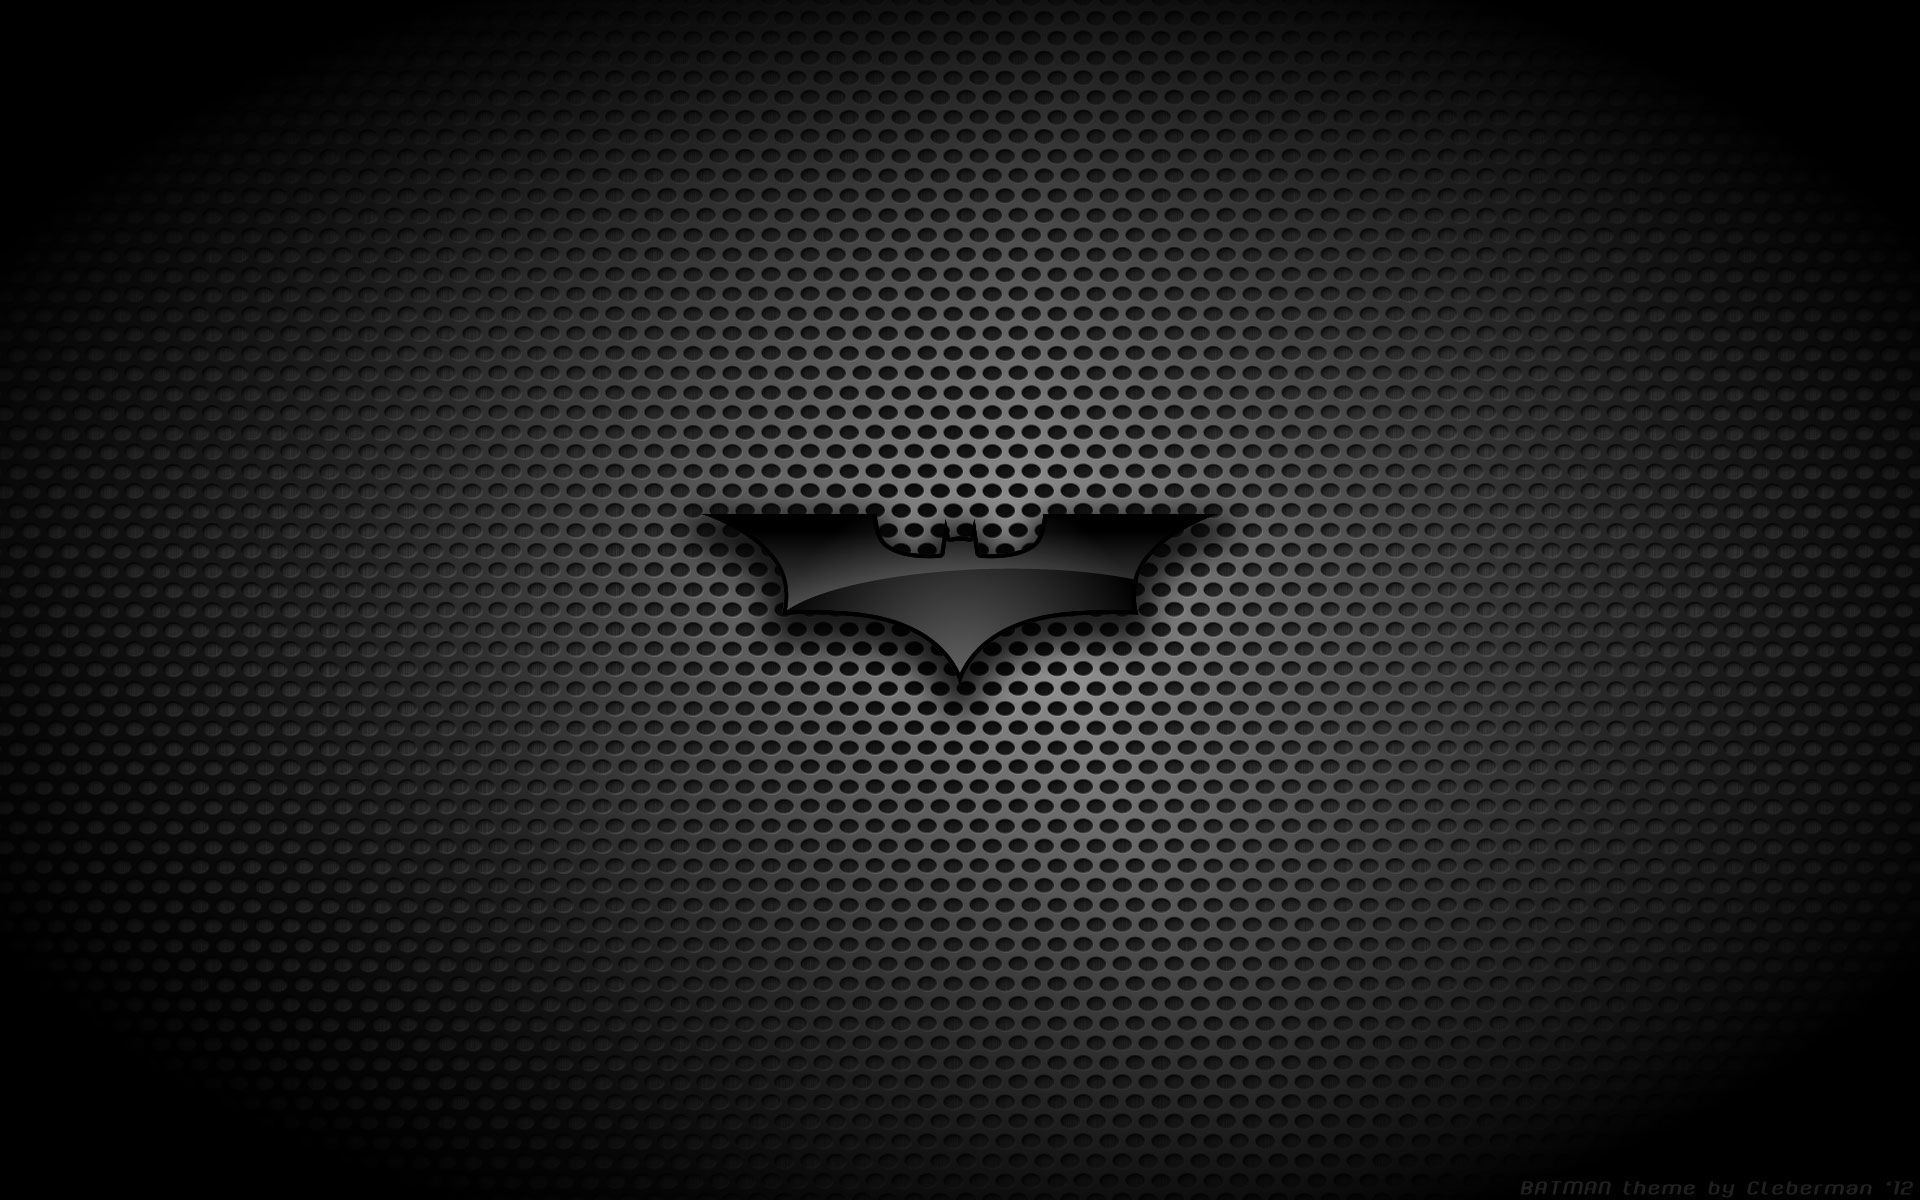 Batman HD Phone Wallpapers - Wallpaper Cave